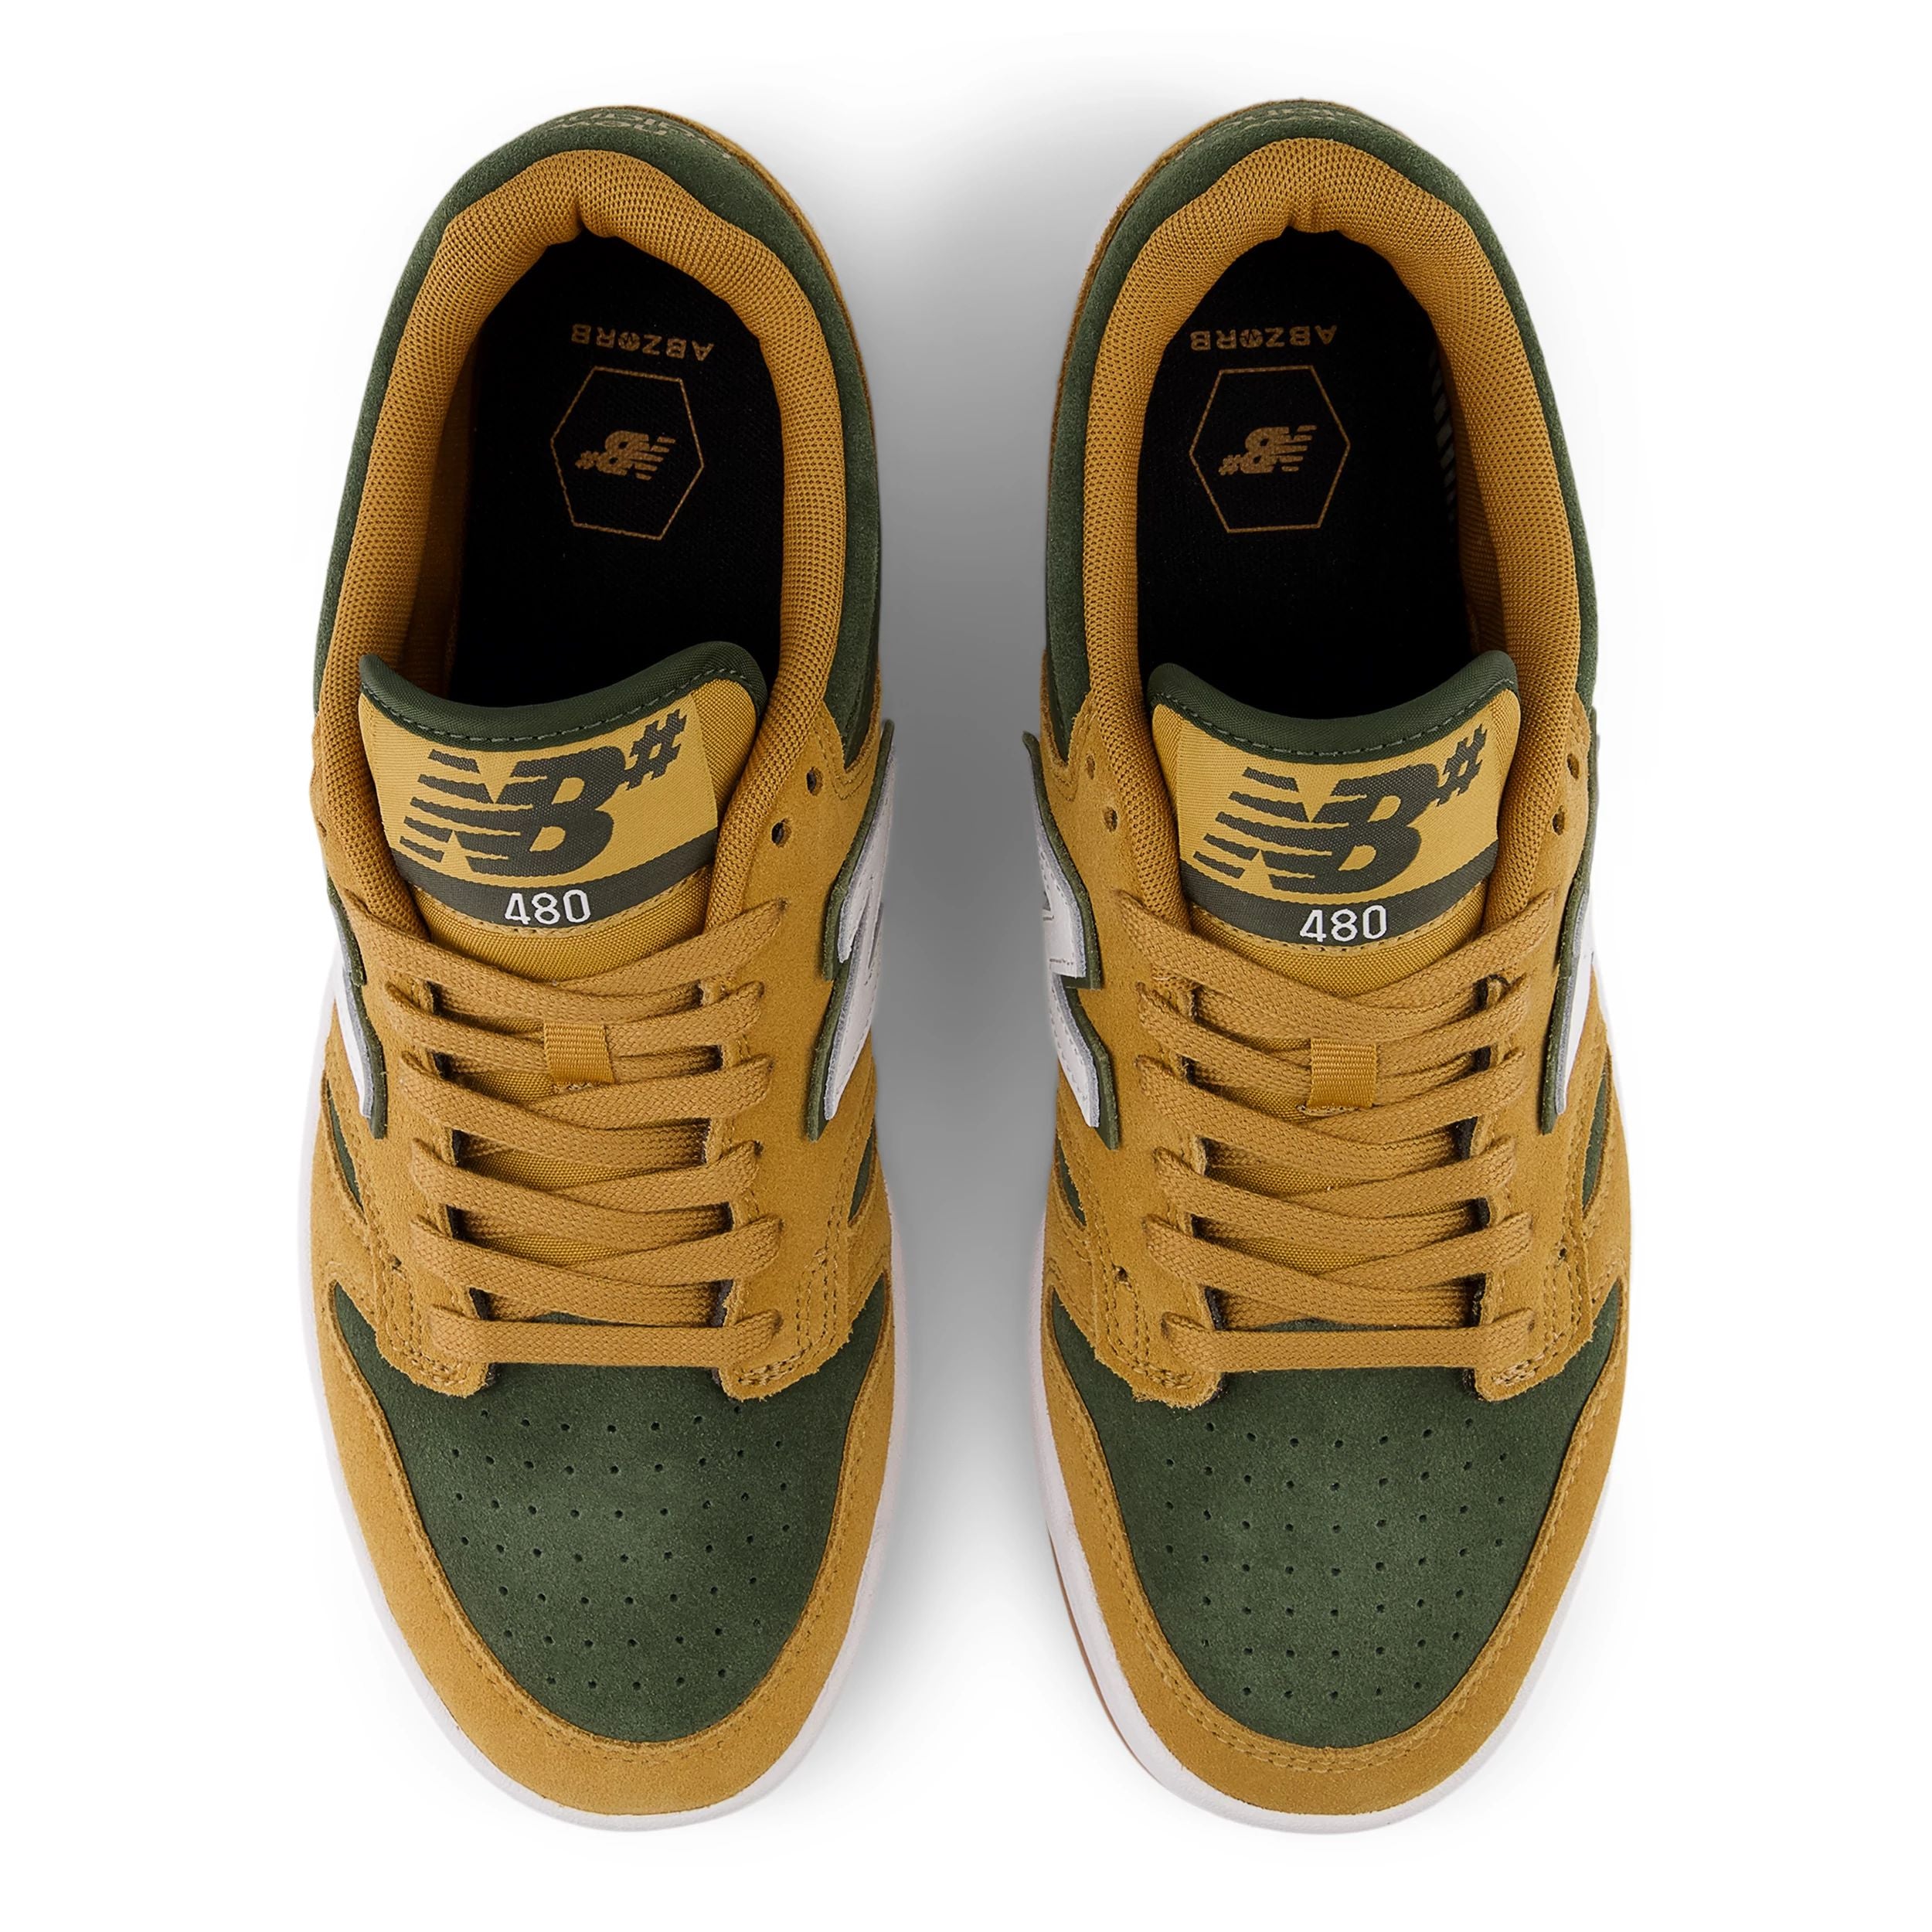 Tan/Green 480 NB Numeric Skate Shoe Top